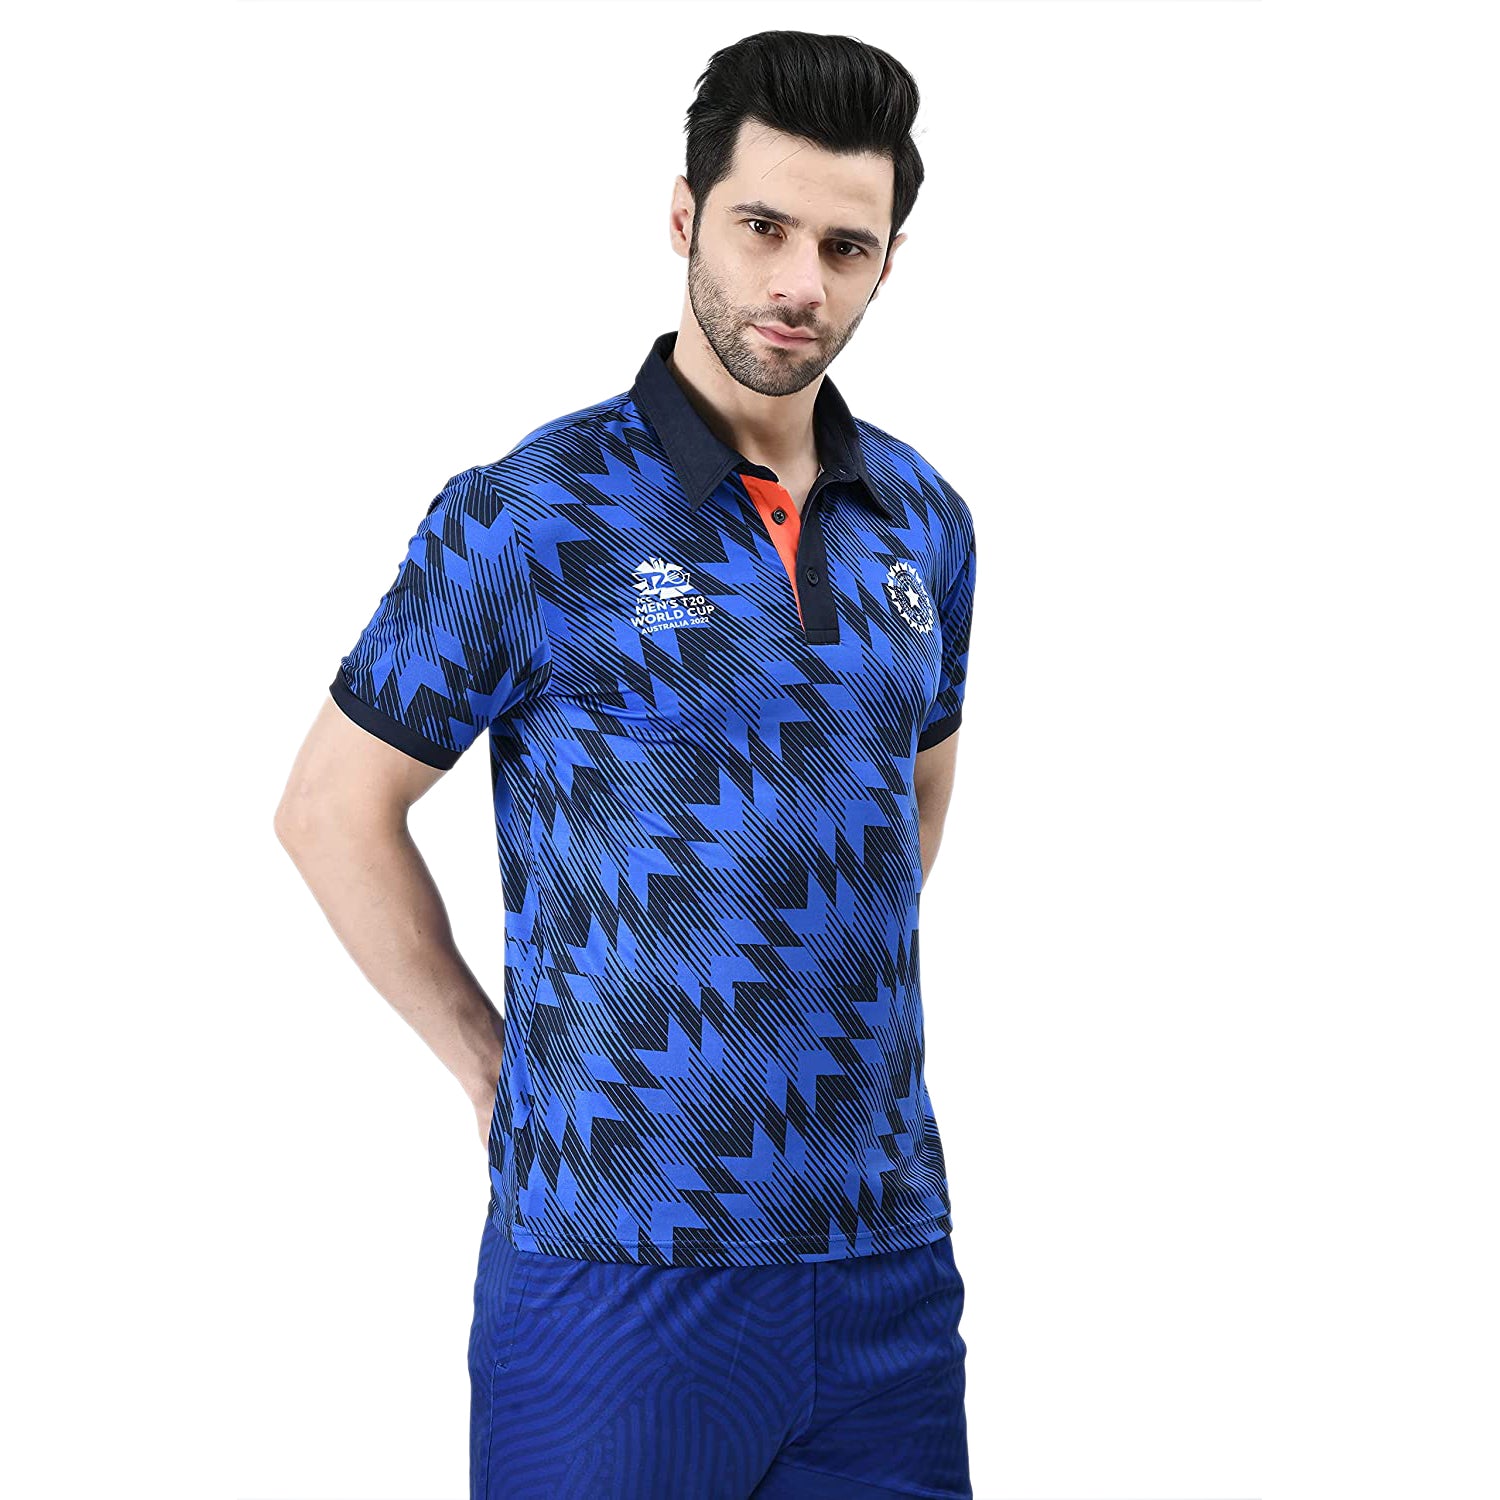 Playr Icc T20 Men's Regular Fit T-Shirt, Royal Blue - Best Price online Prokicksports.com